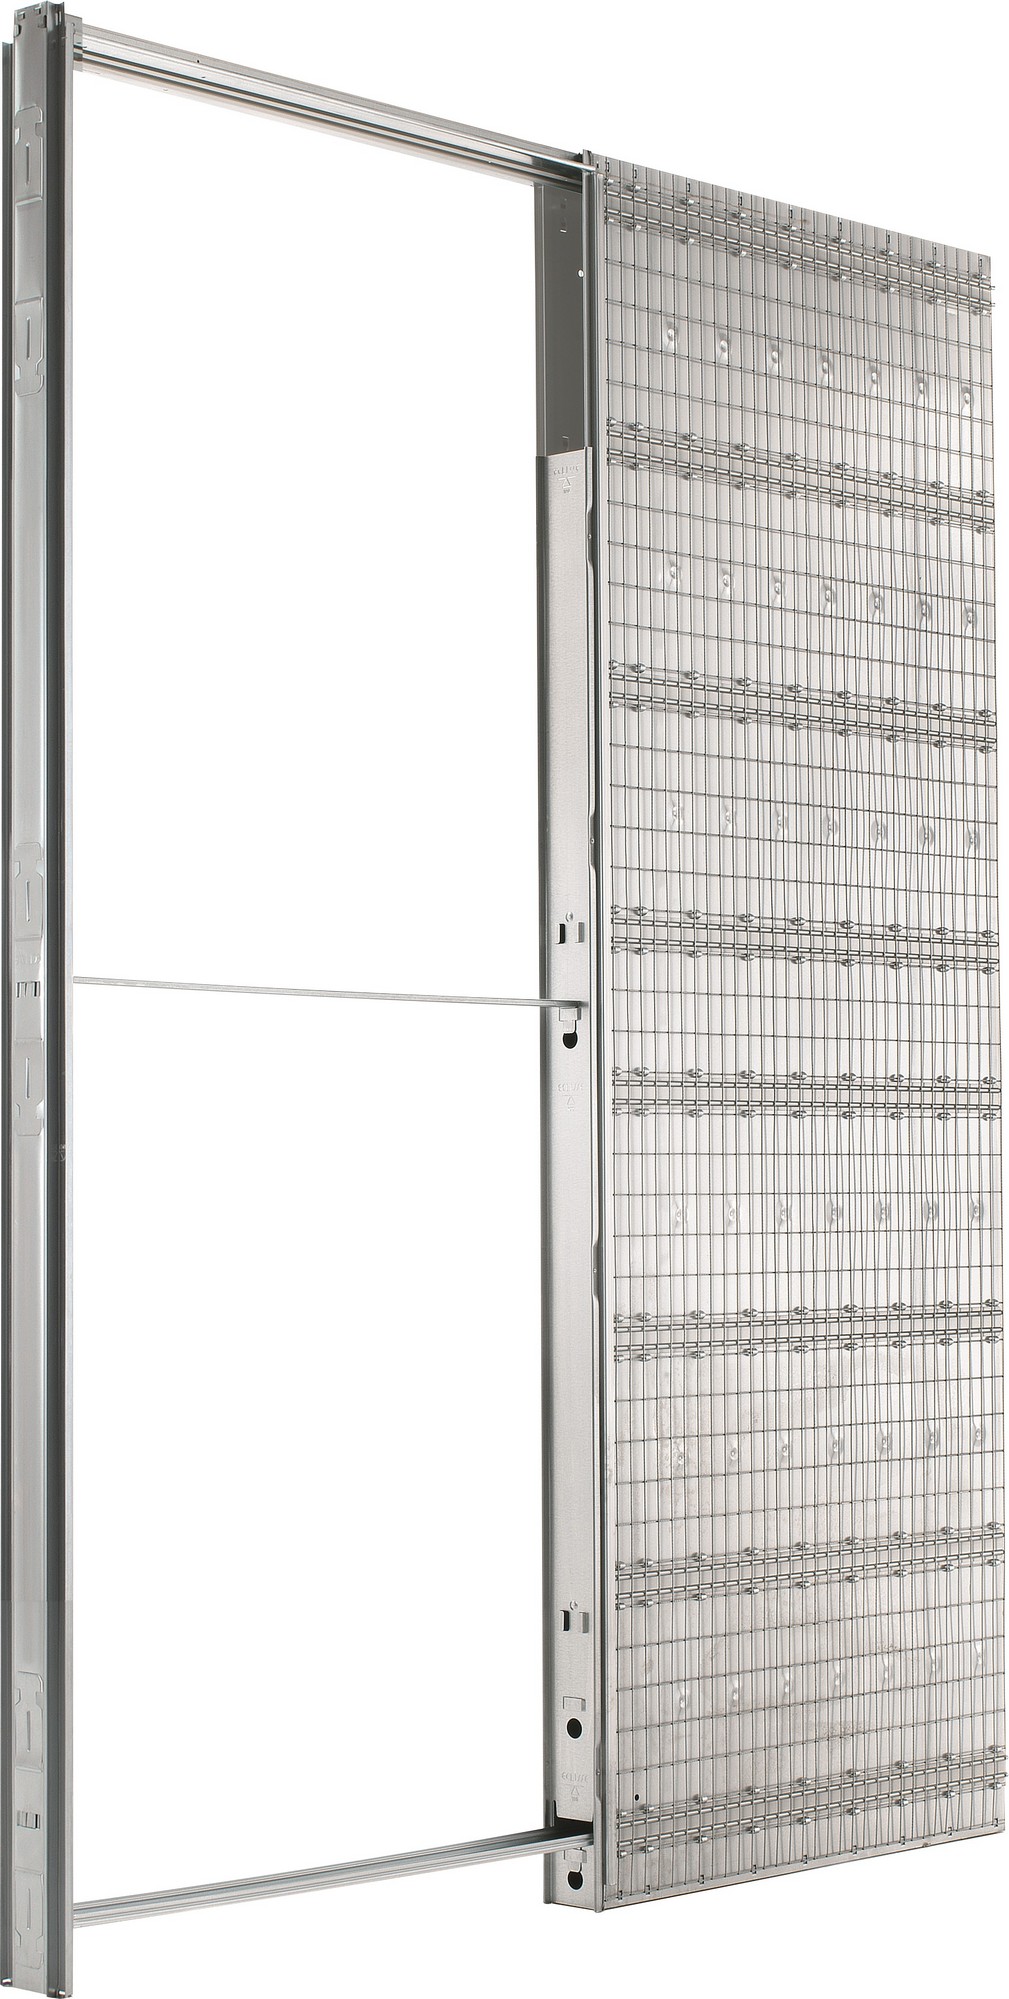 Pouzdro Eclisse Standard 800/2100 mm do zdiva tl. 100 mm